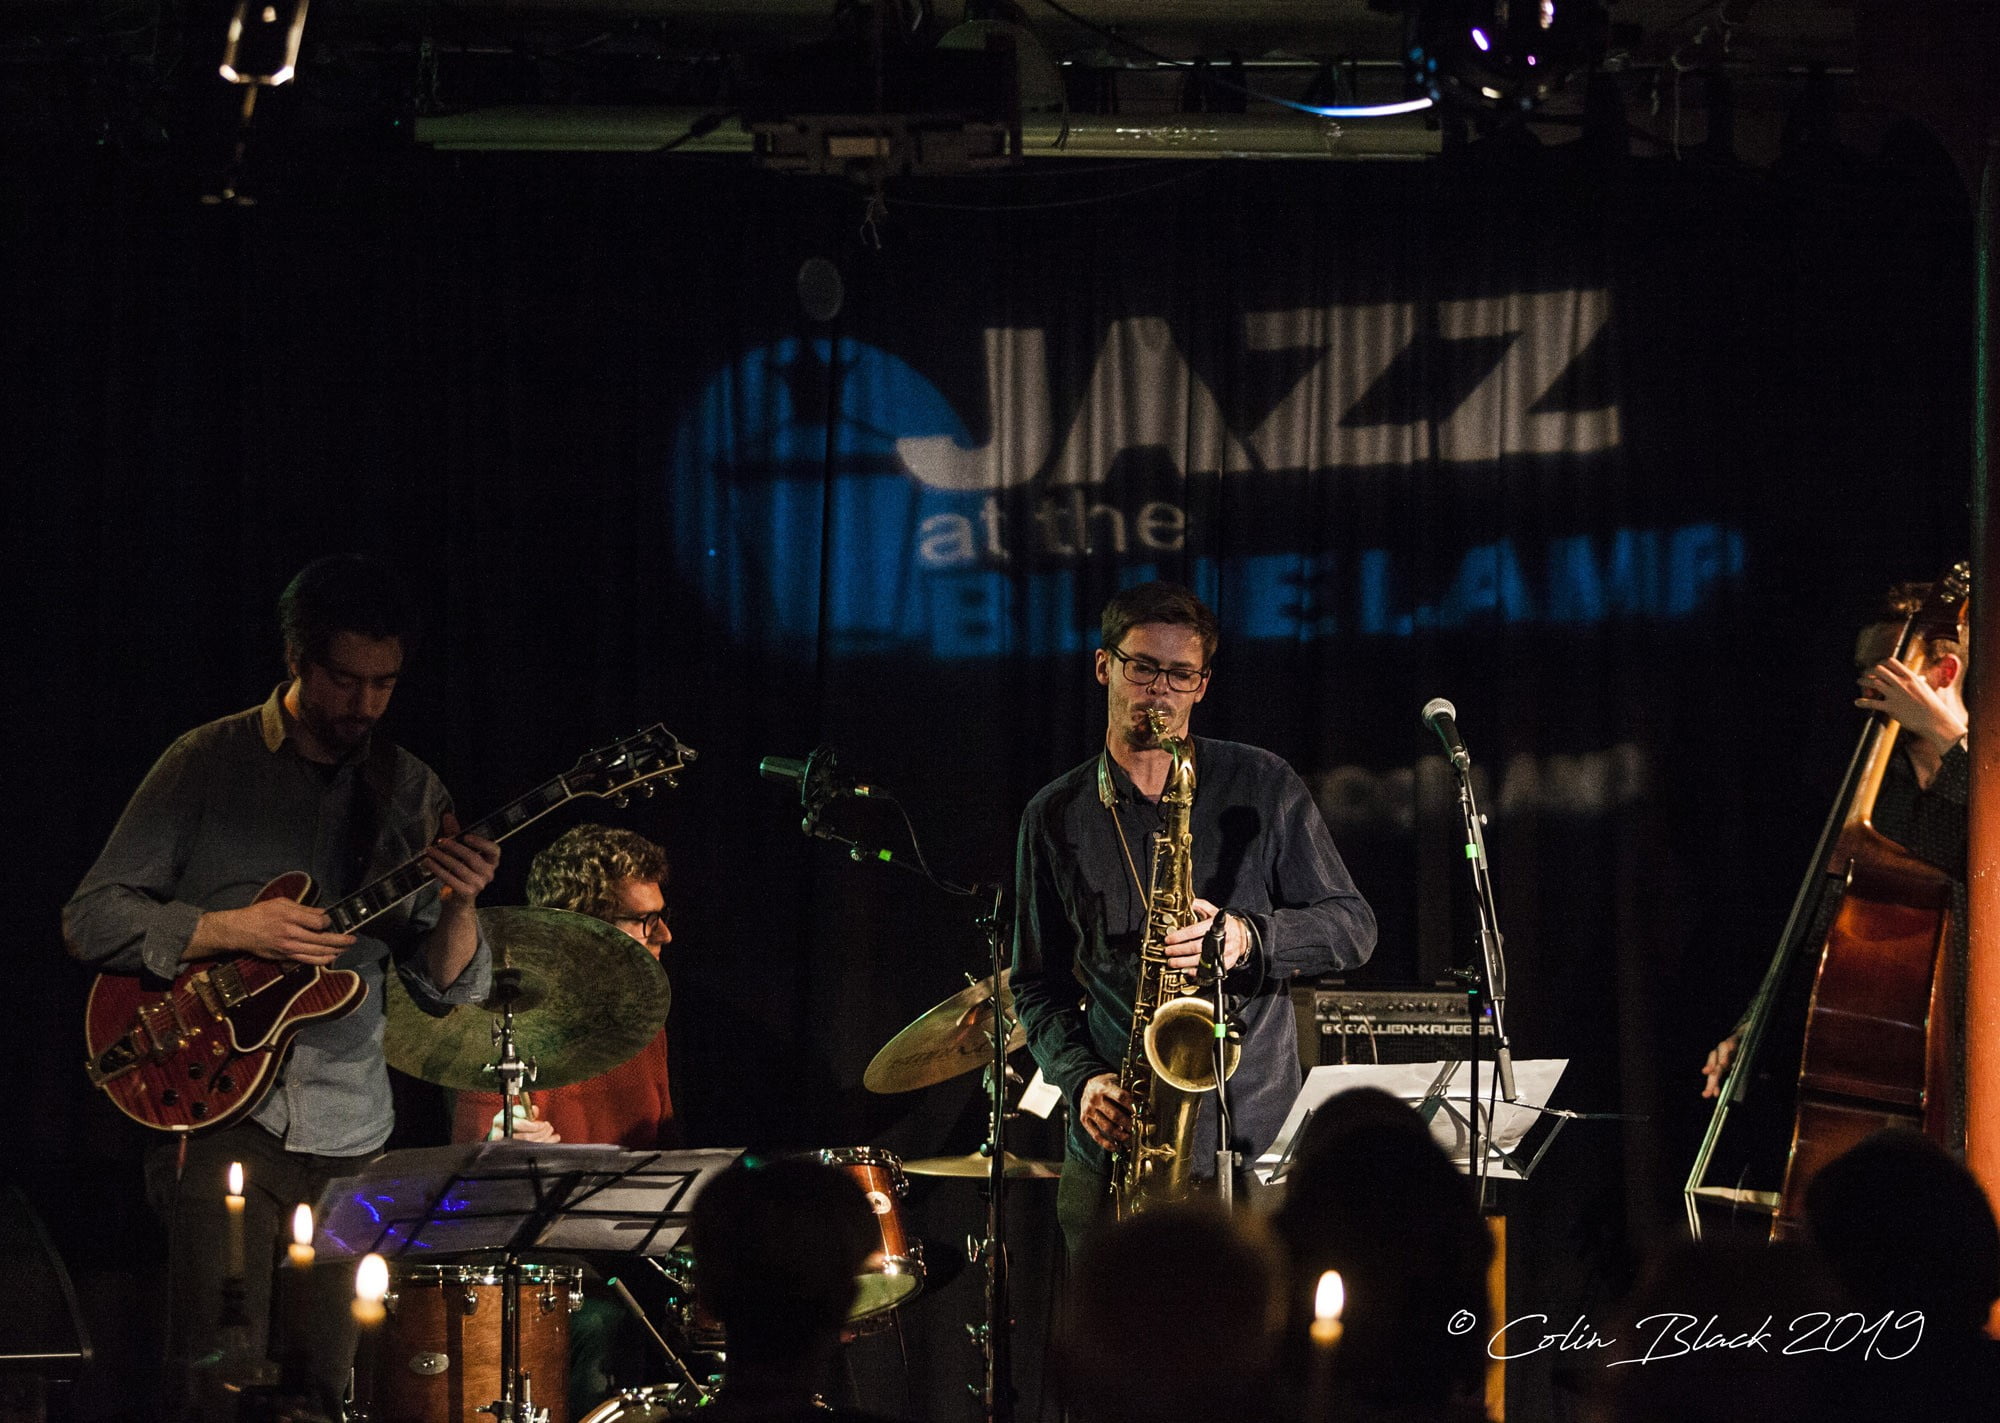 Jazz at the Blue Lamp